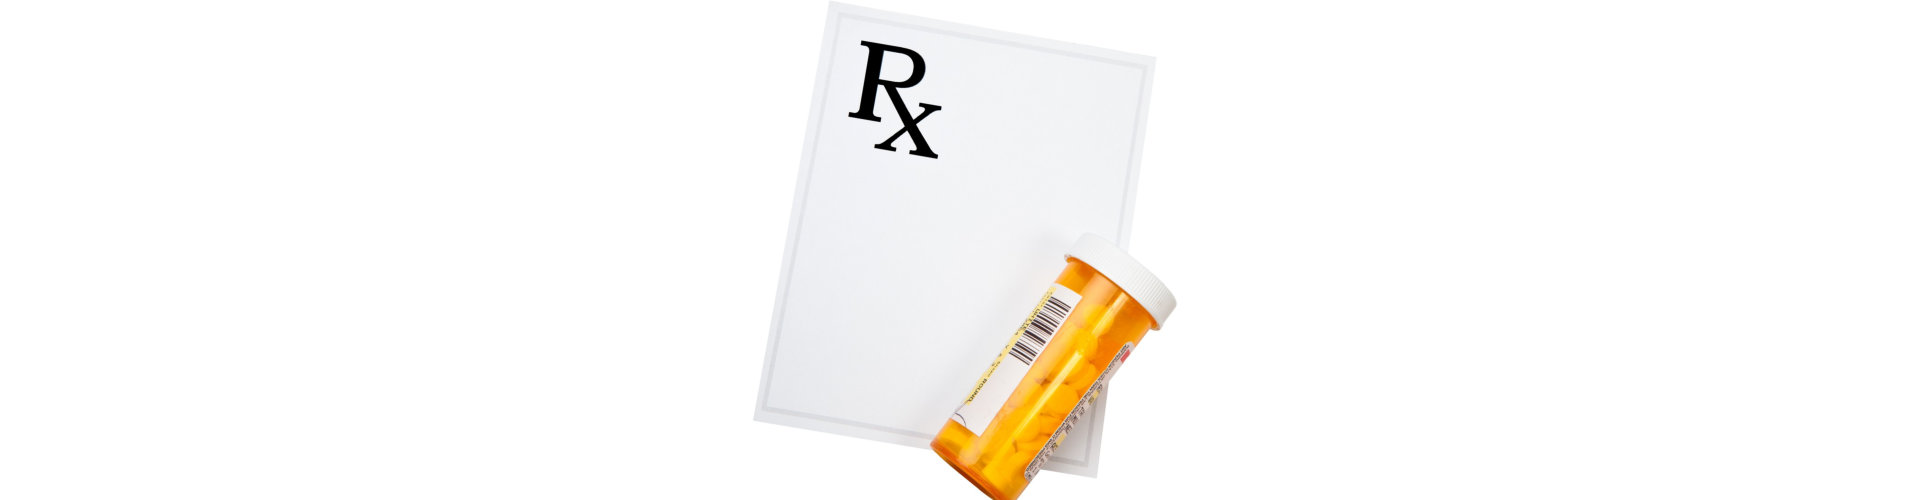 prescription drug bottle and blank prescription pad